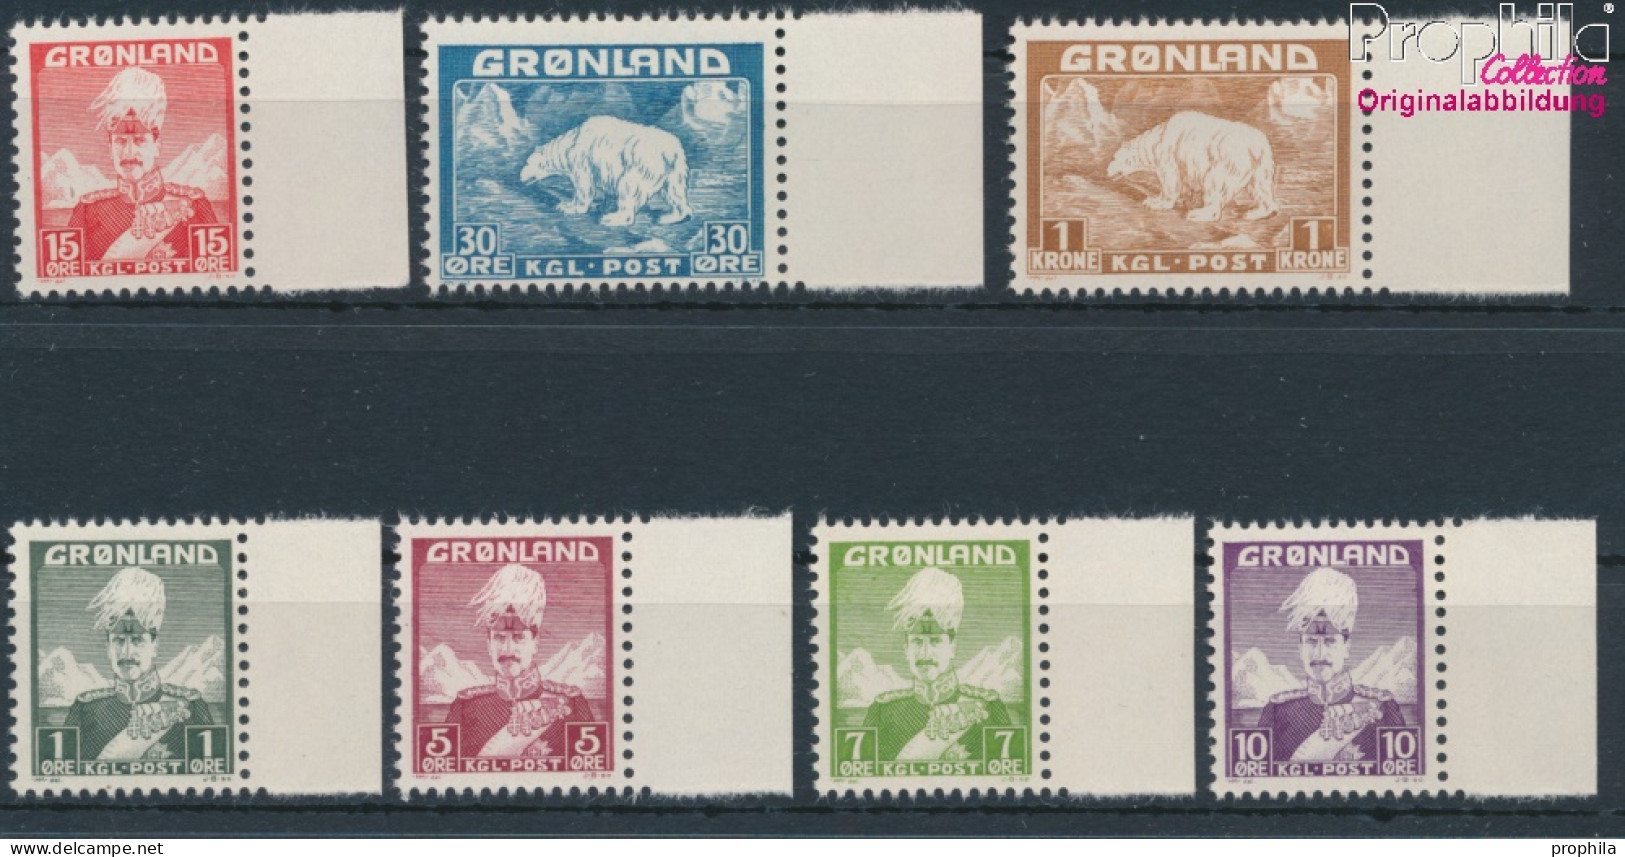 Dänemark - Grönland Postfrisch Christian X. 1938 König Christian X.  (10174193 - Used Stamps